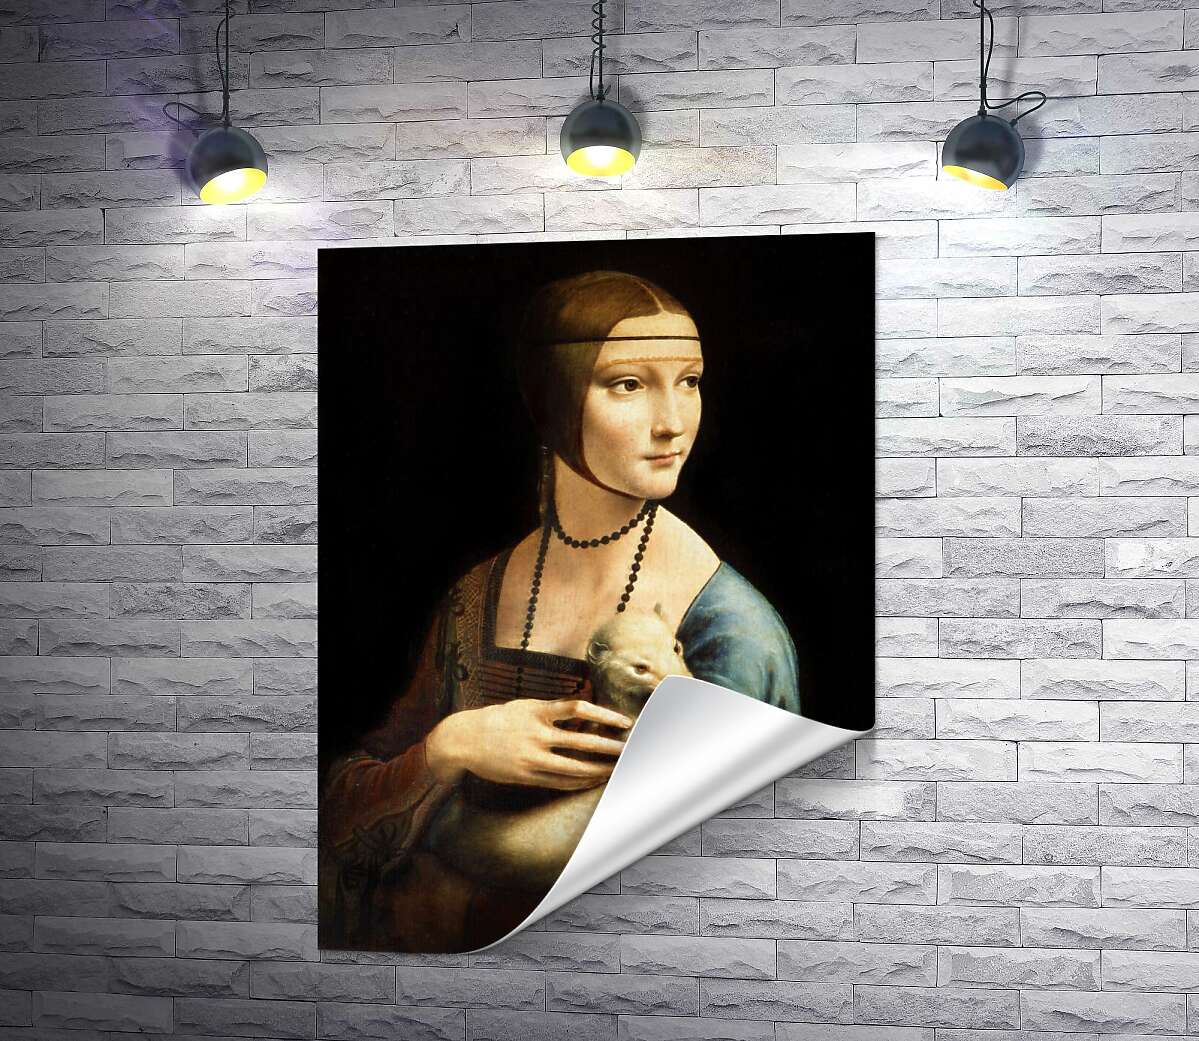 друк Пані з горностаєм (Dama con l'ermellino) - Леонардо да Вінчі (Leonardo da Vinci)